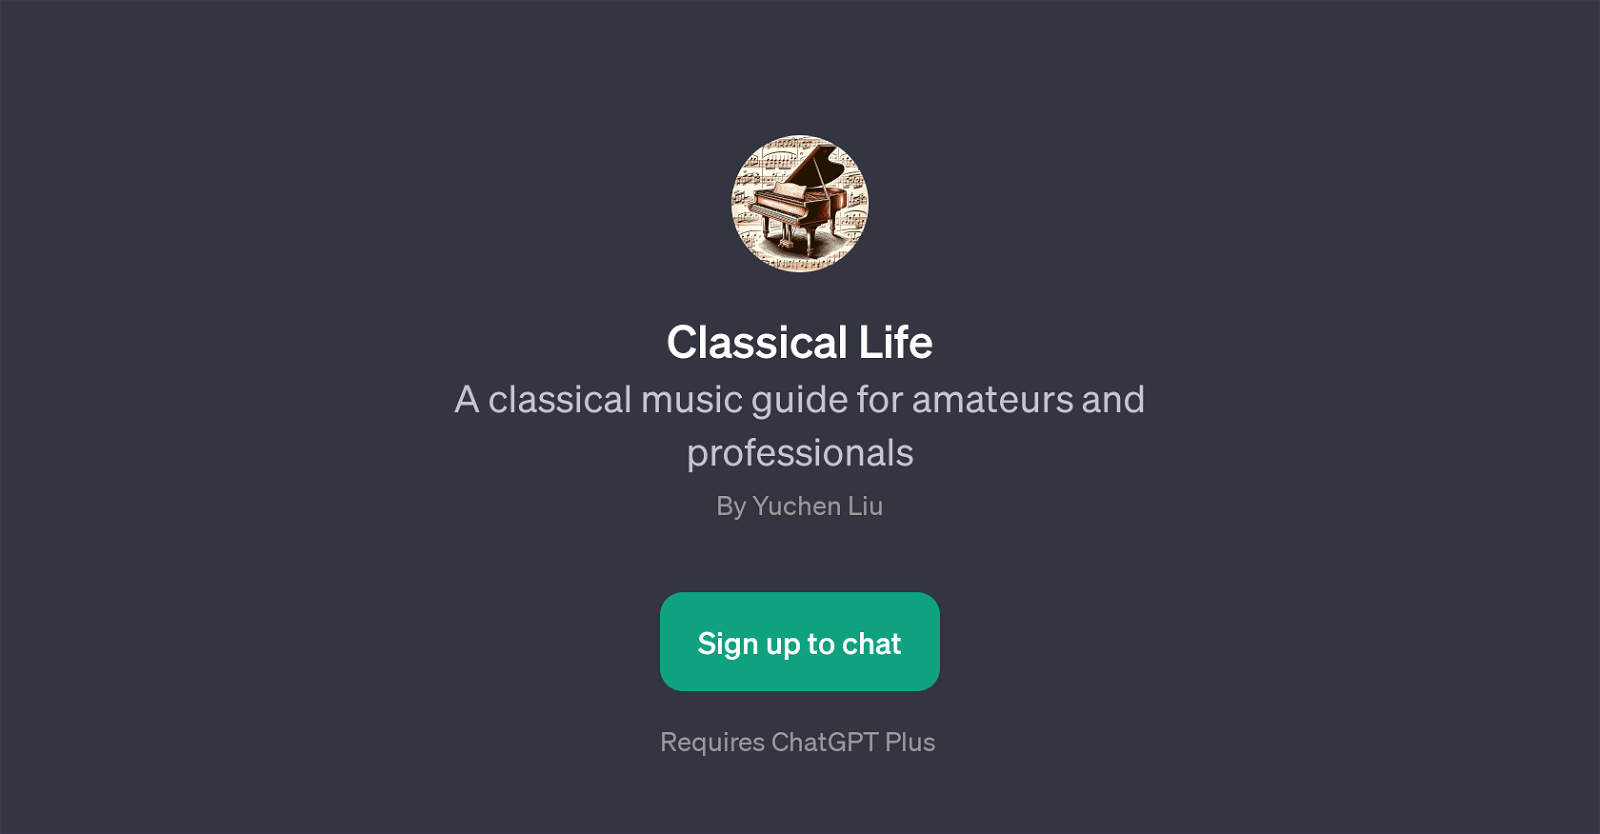 Classical Life website